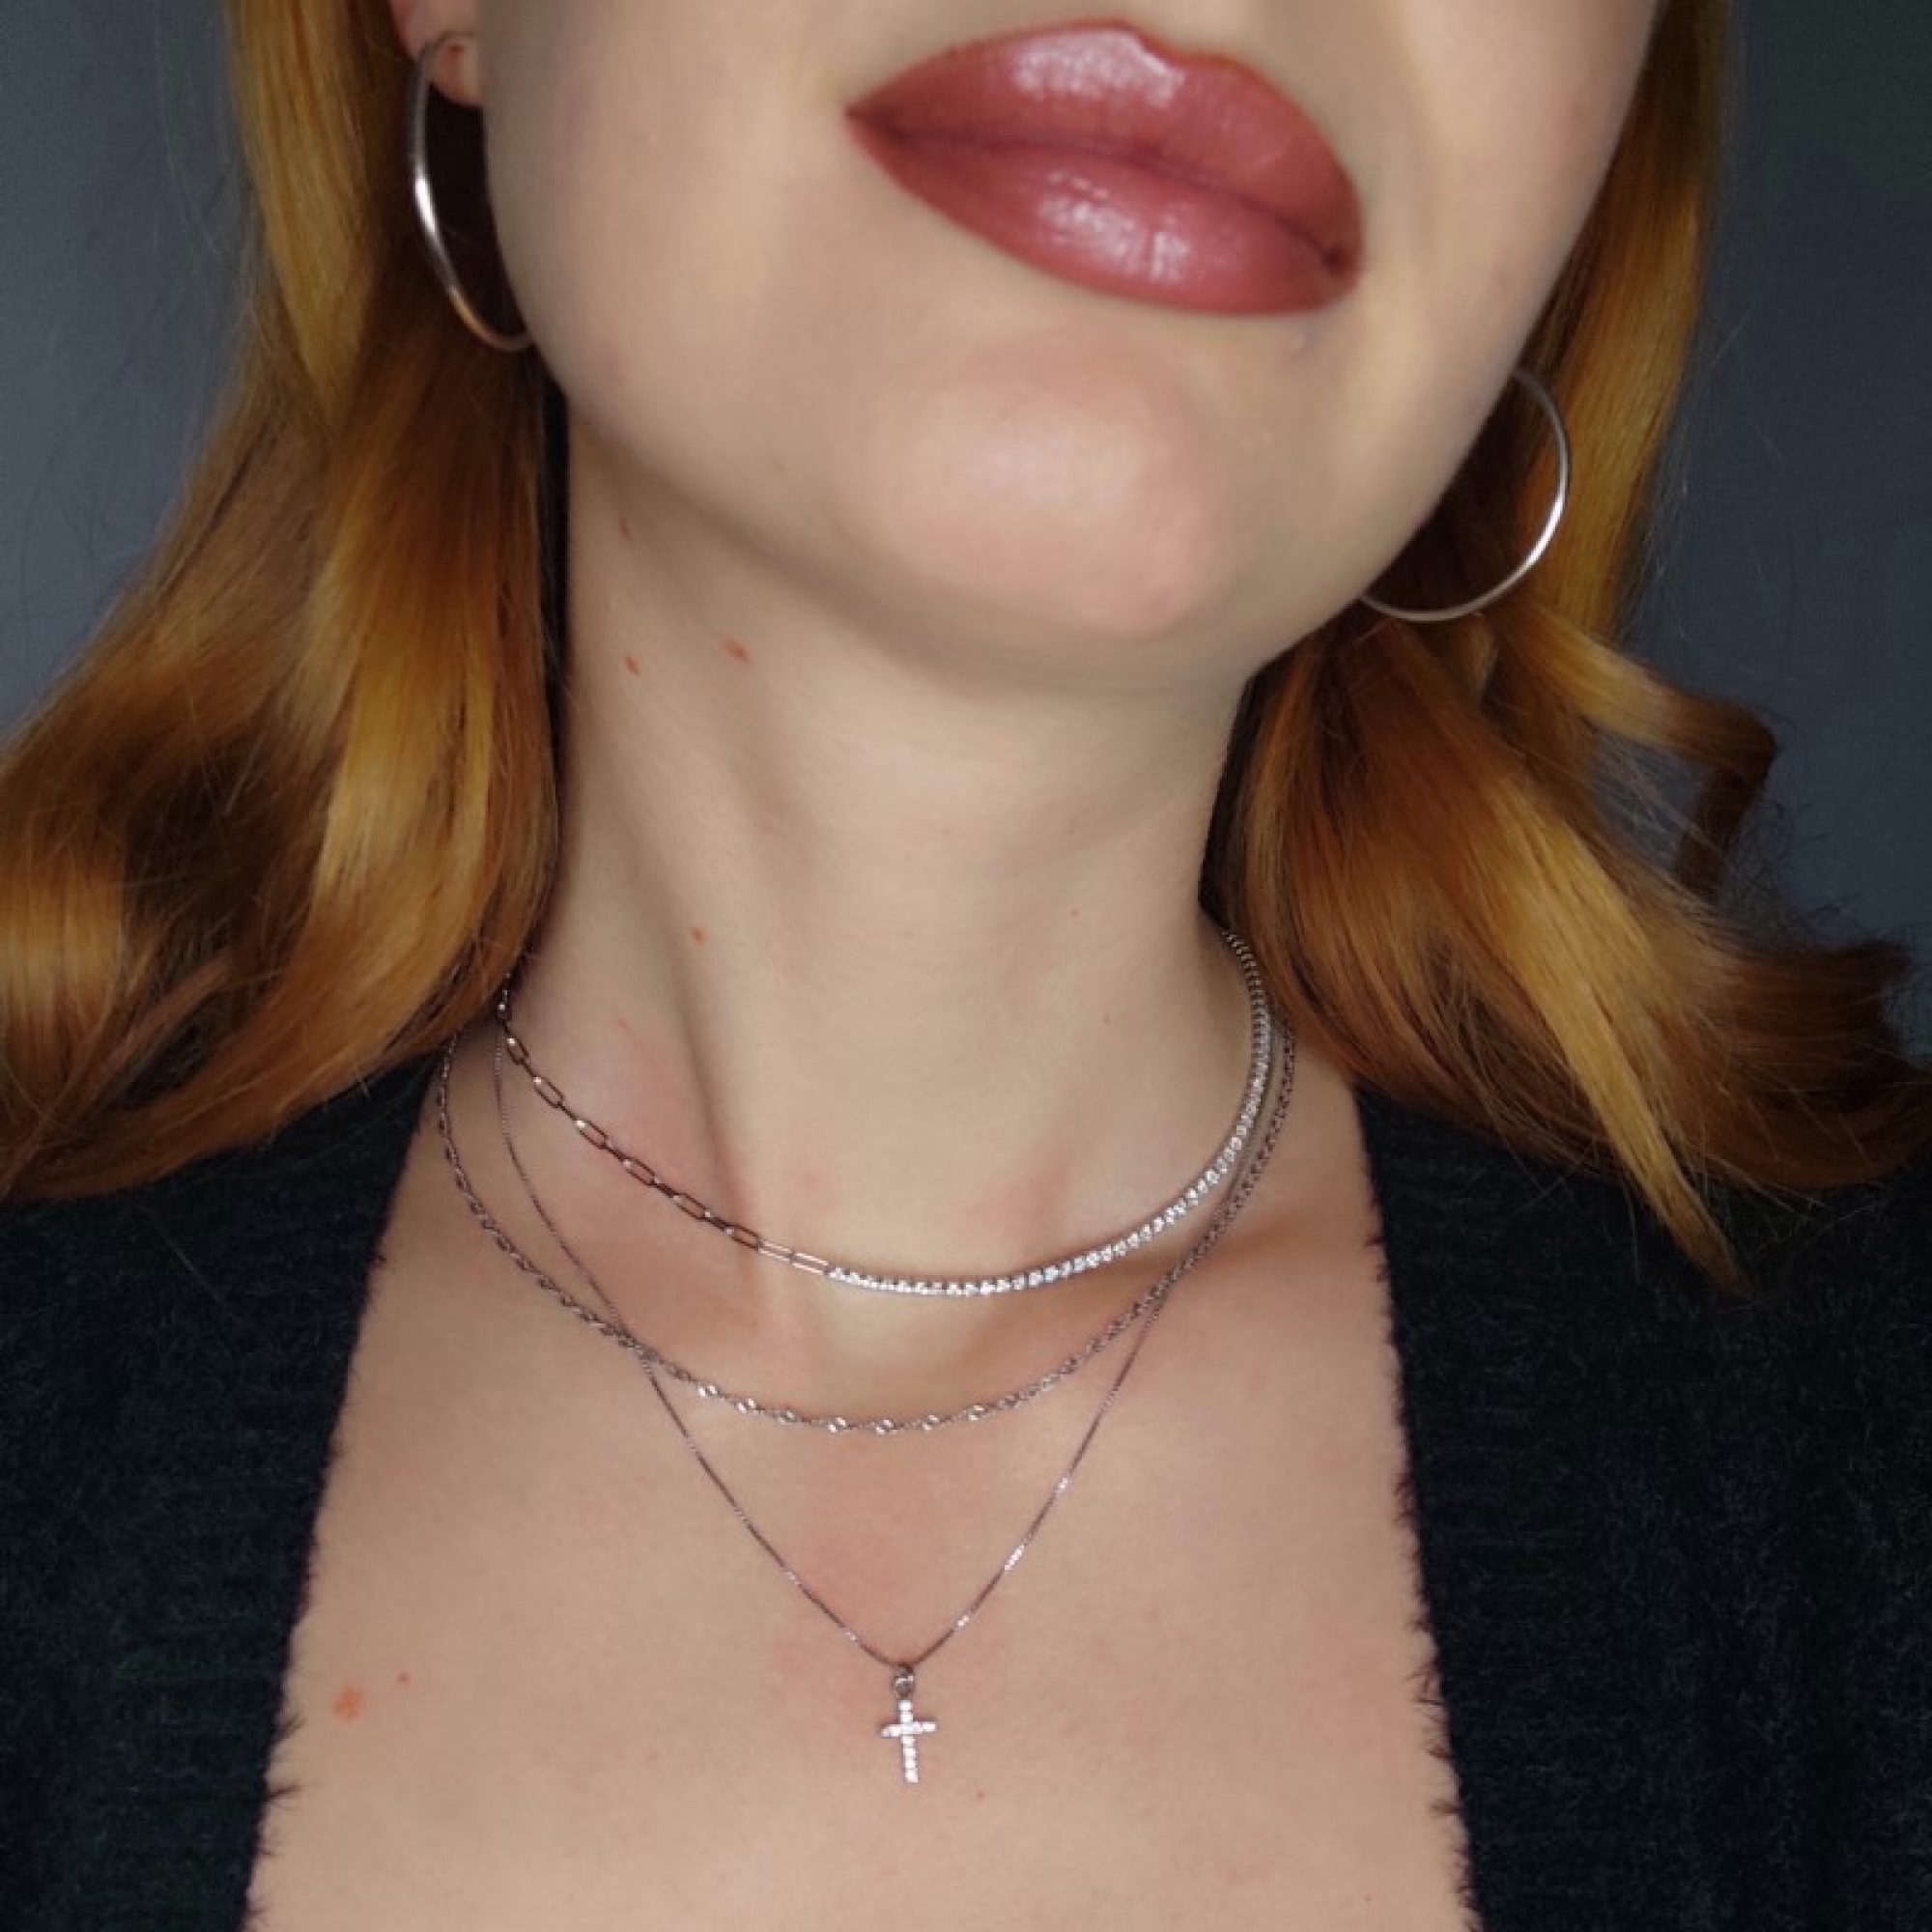 Silver necklace with zircon stones